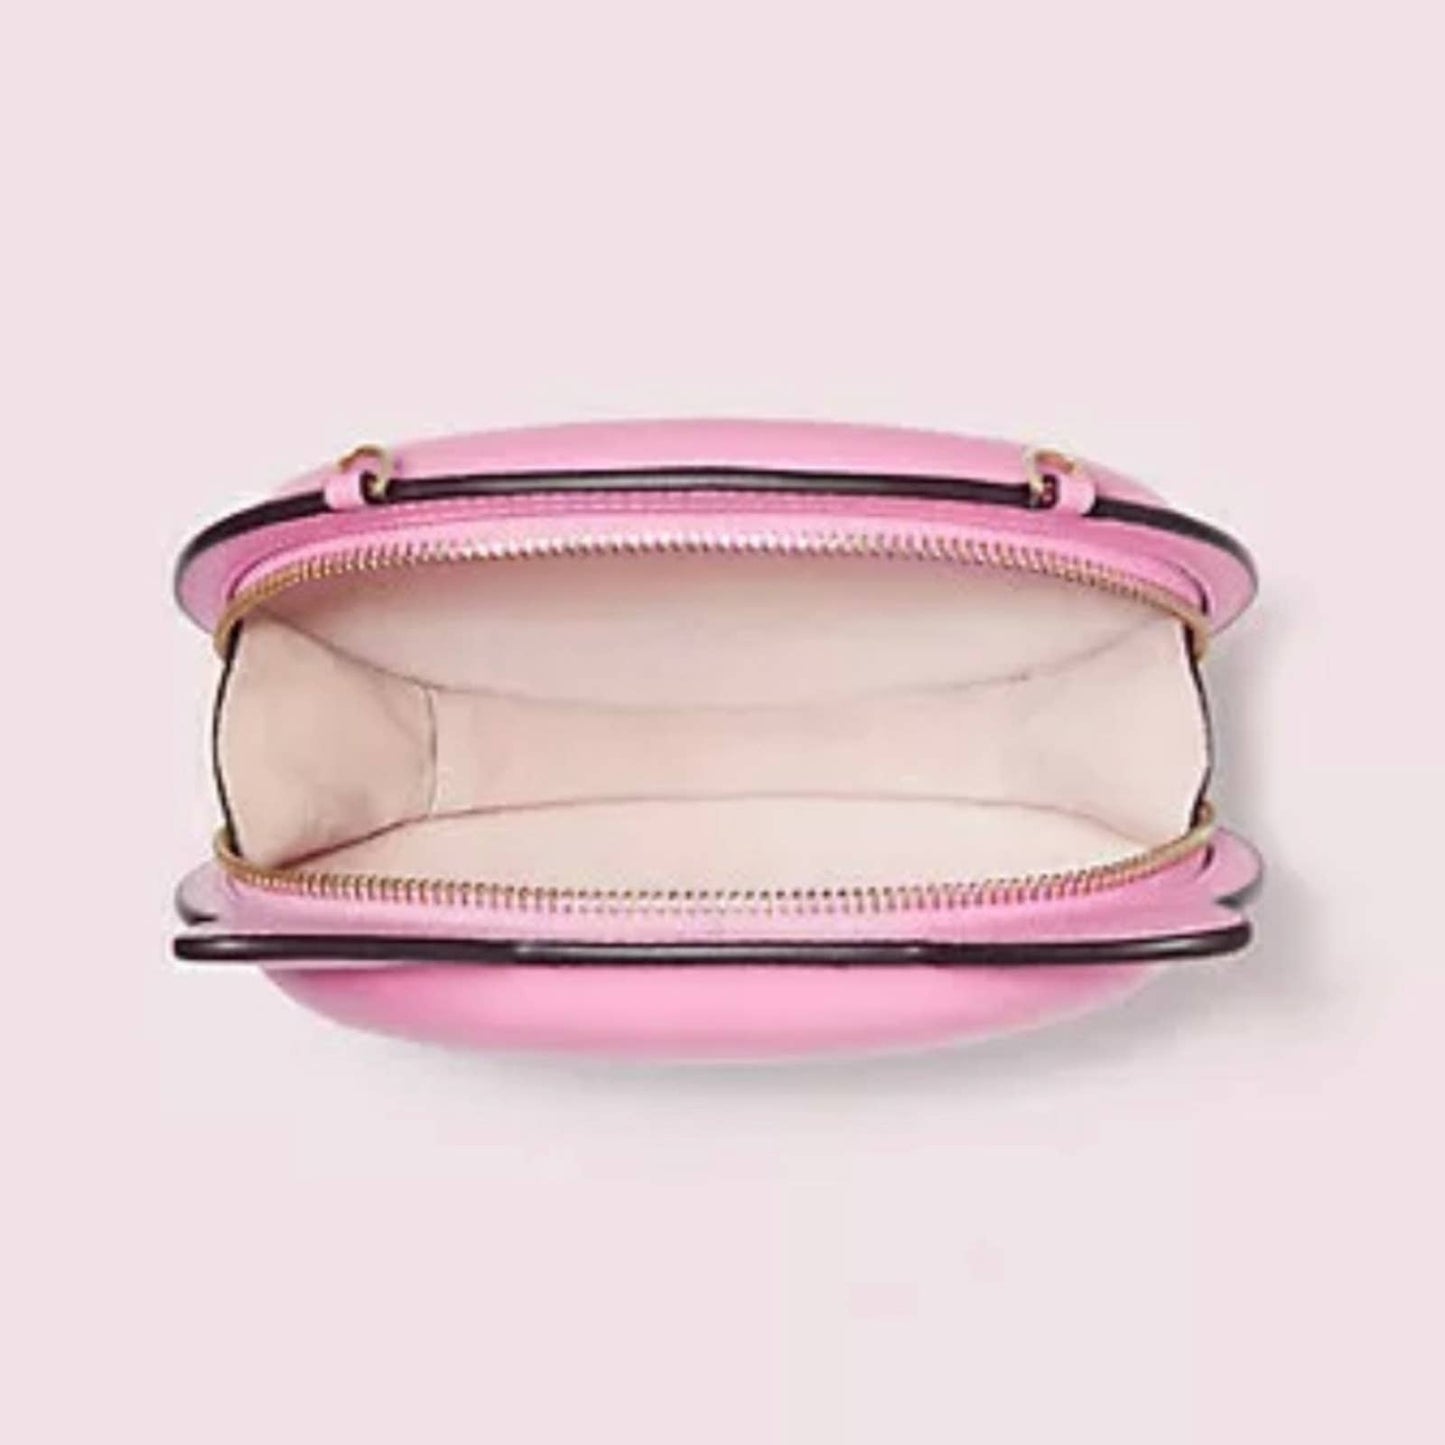 Kate Spade “Cats” Beight Pink Crossbody Bag w/ Gold Hardware